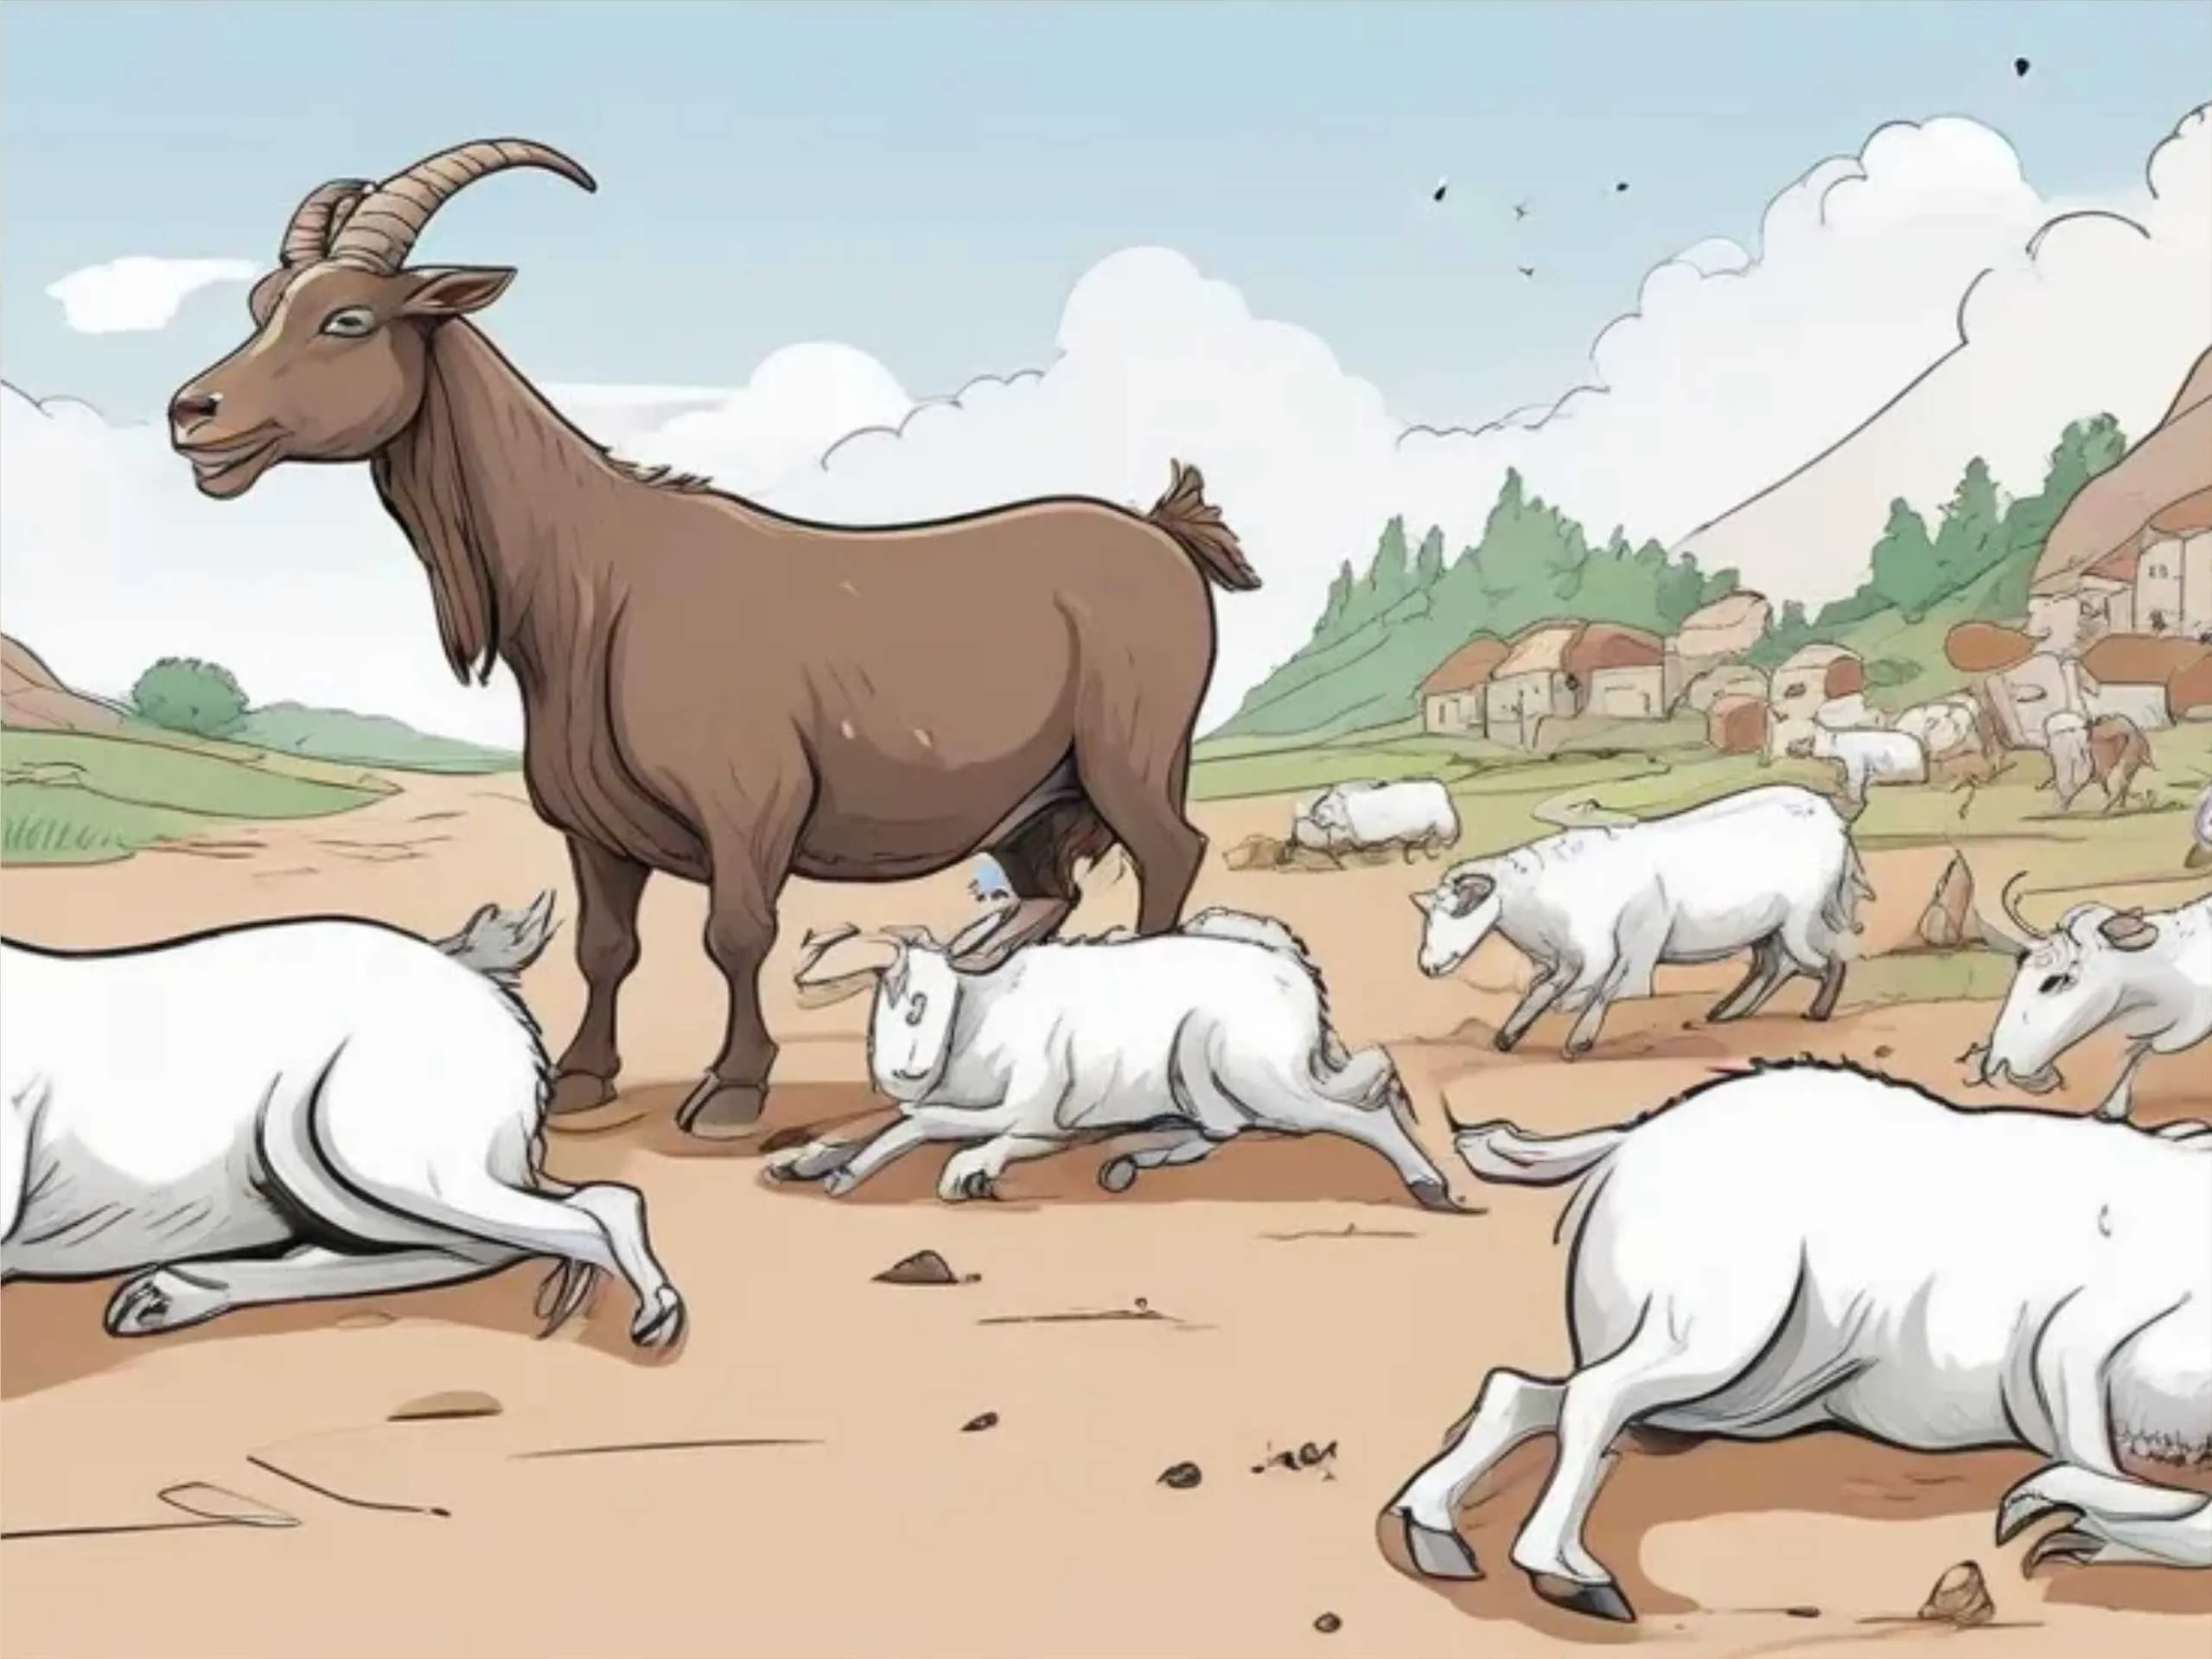 Goat cartoon image